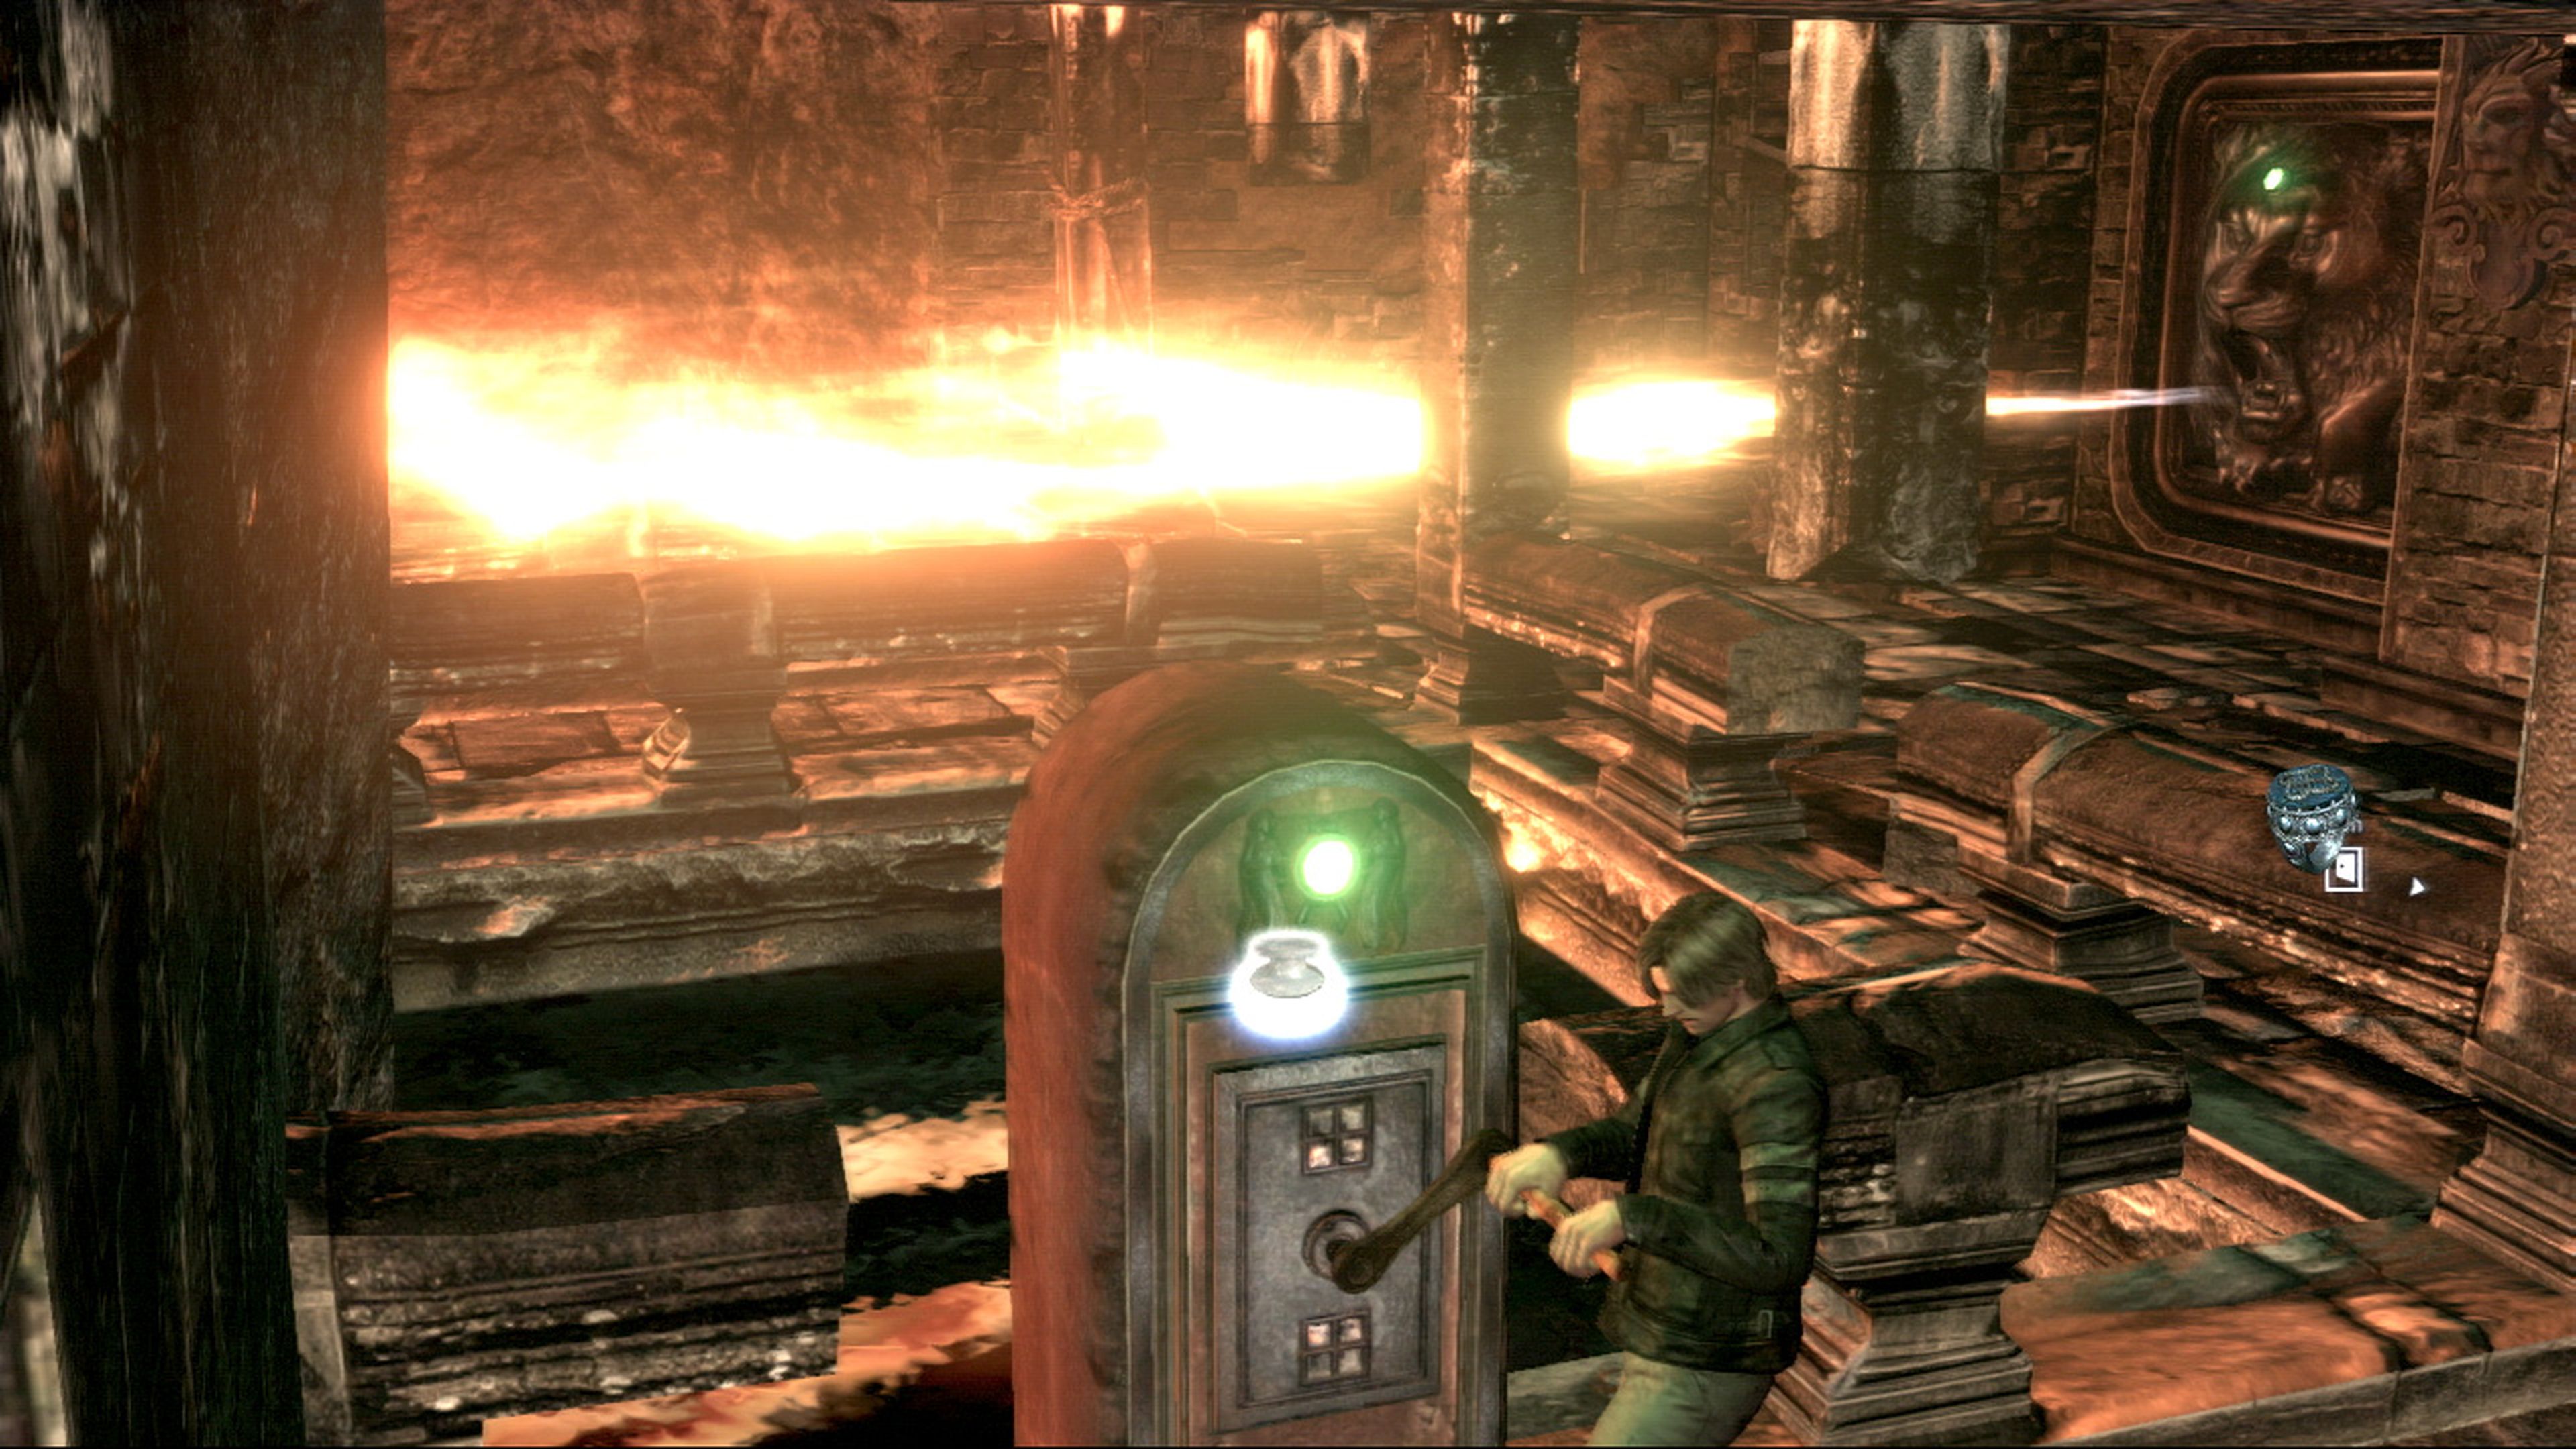 Análisis infectado de Resident Evil 6